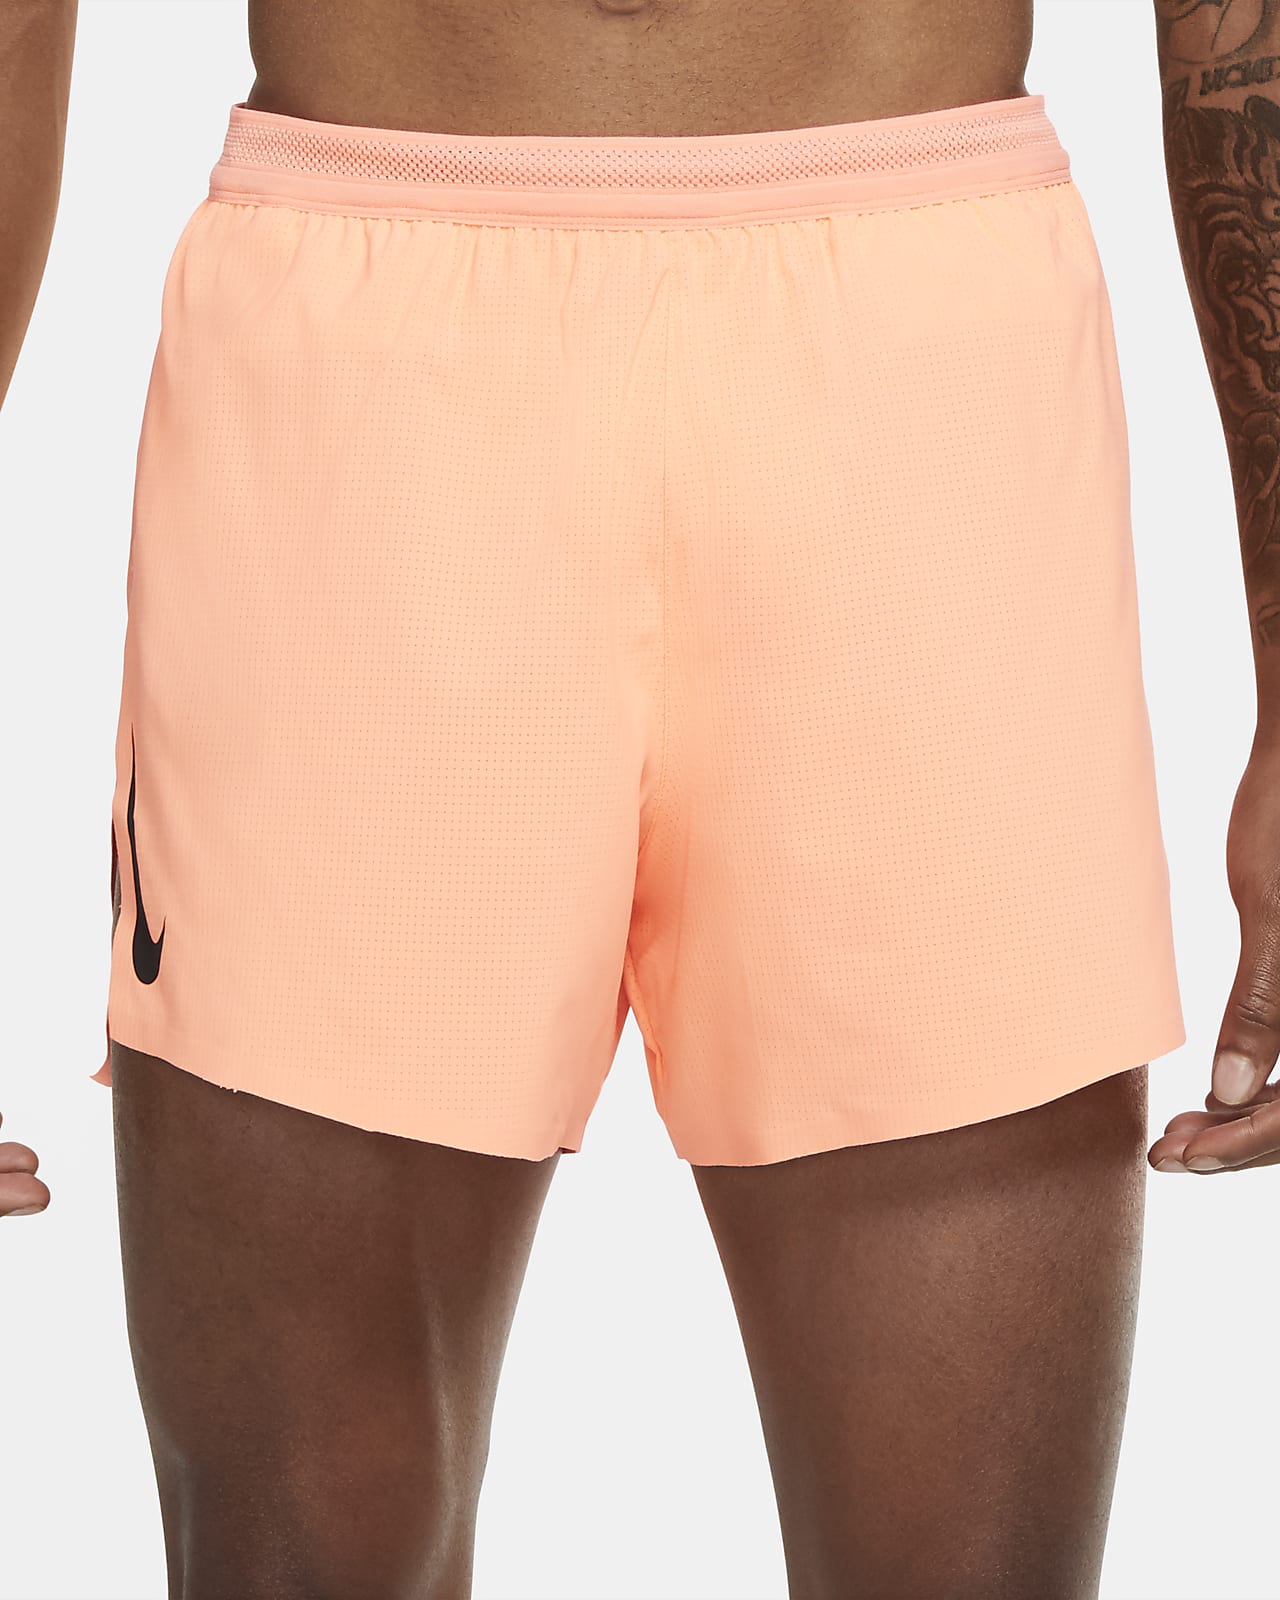 Nike AeroSwift Men's 2 Brief-Lined Racing Shorts.